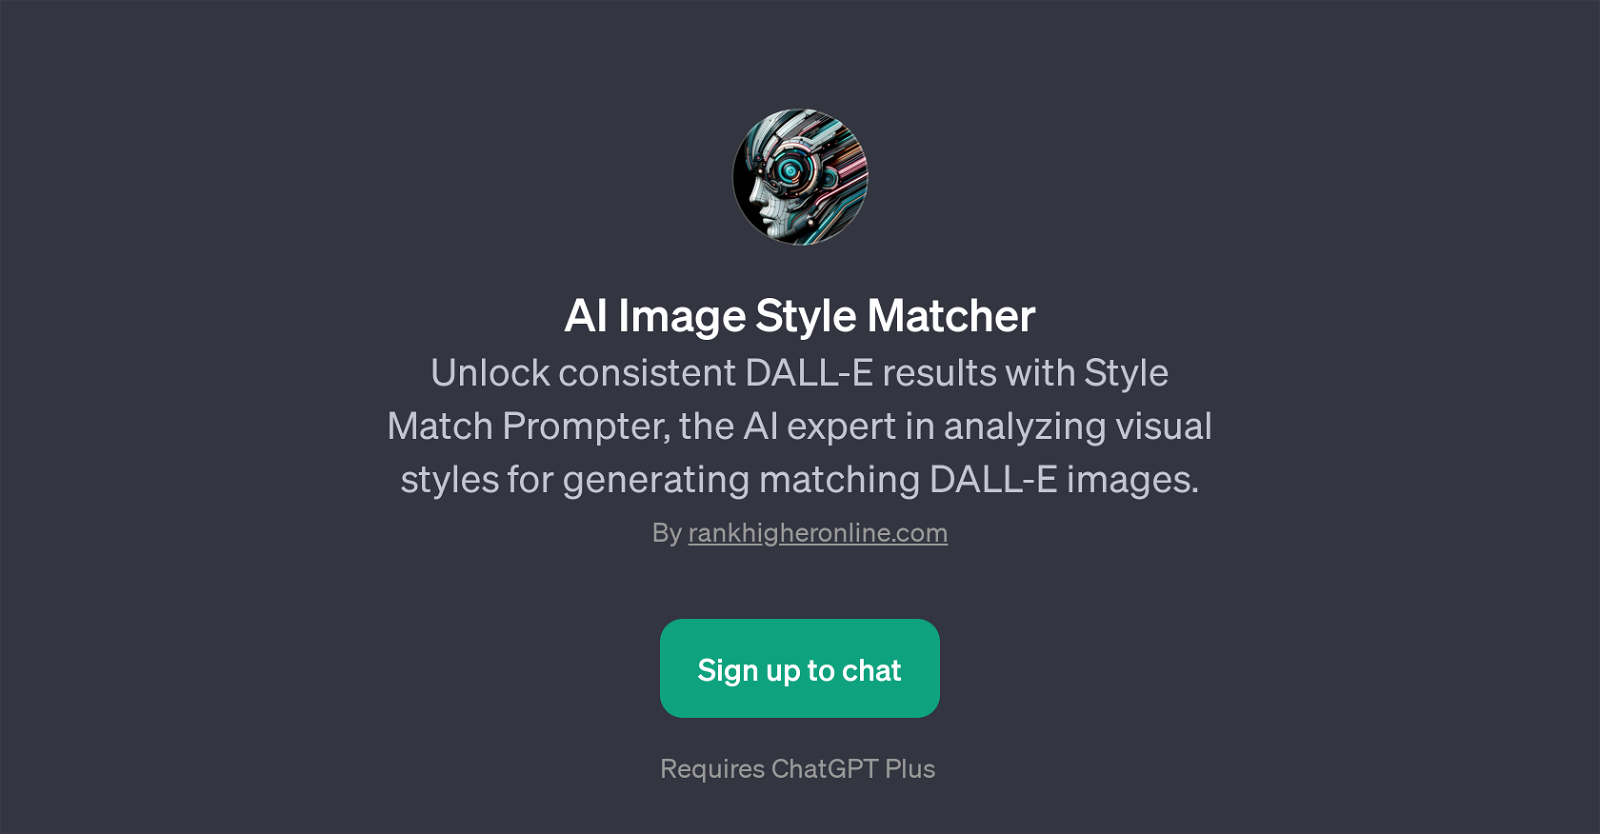 AI Image Style Matcher website